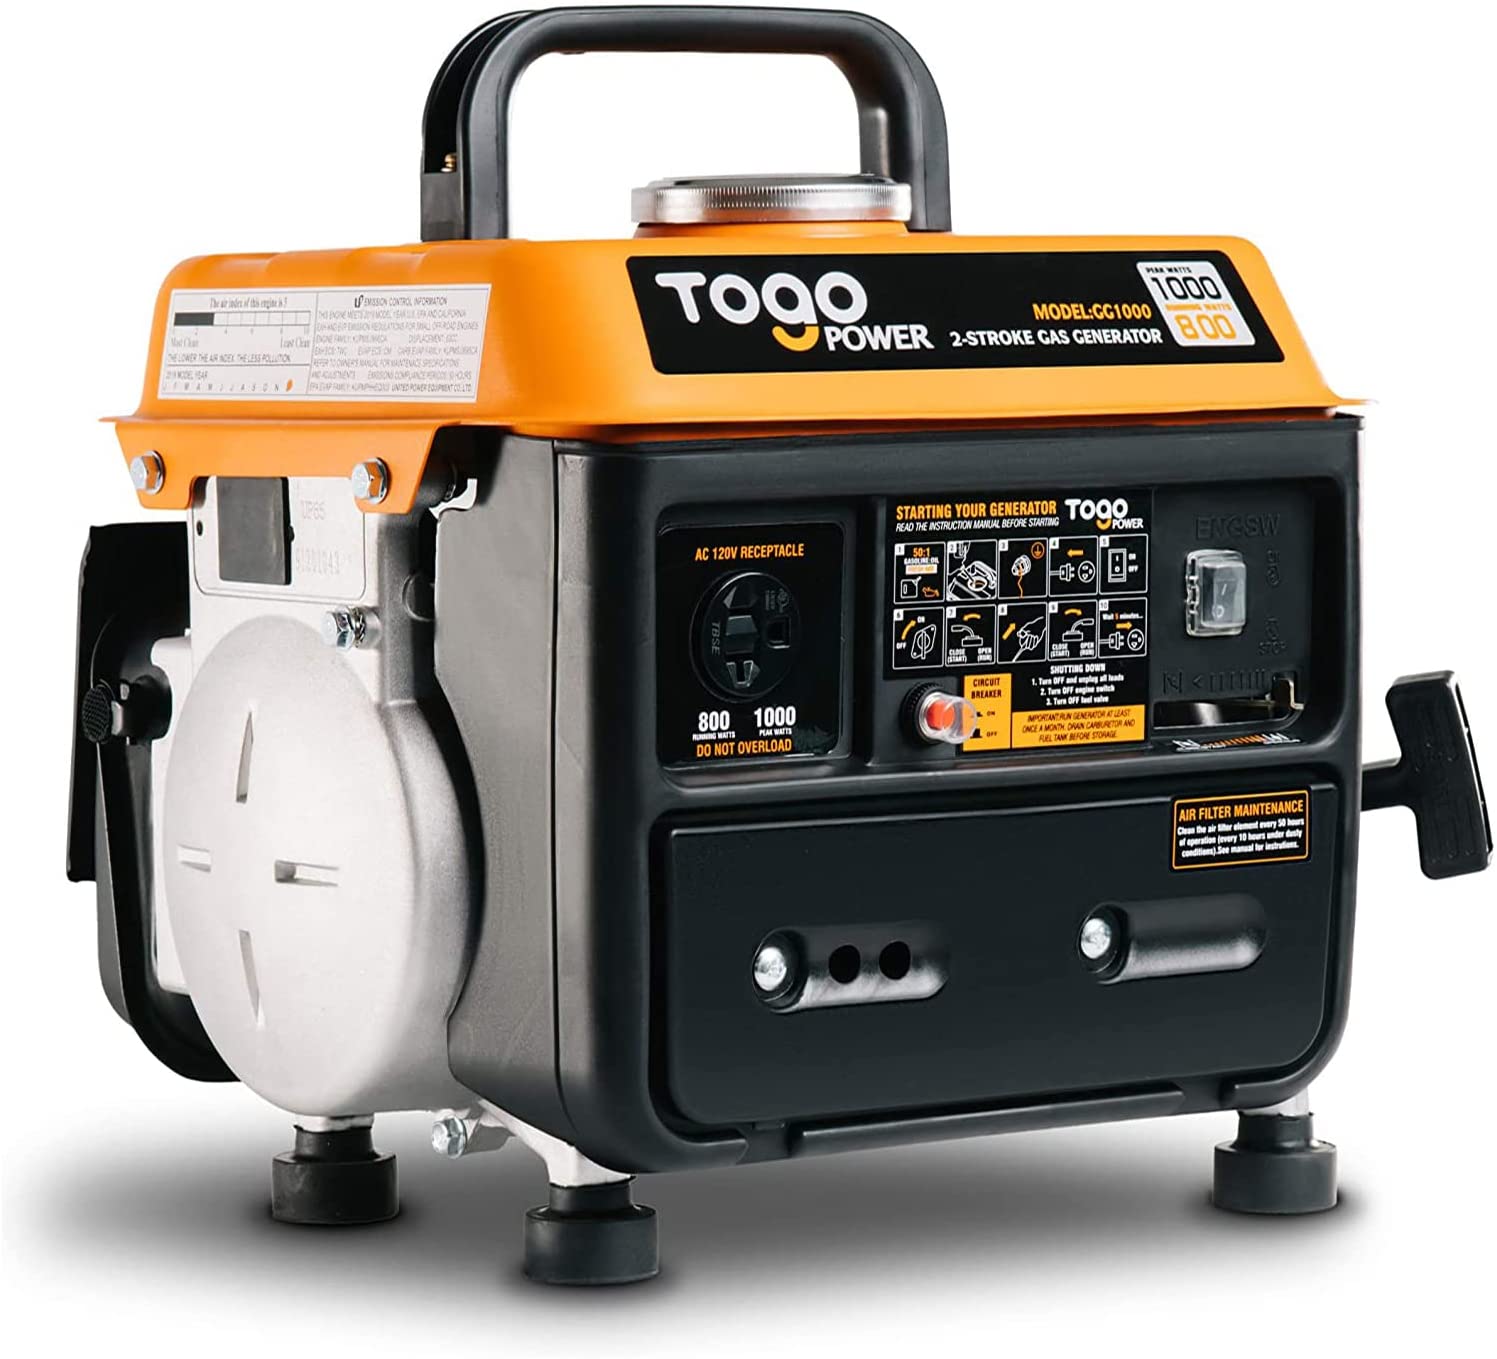 Togopower GG1000 1